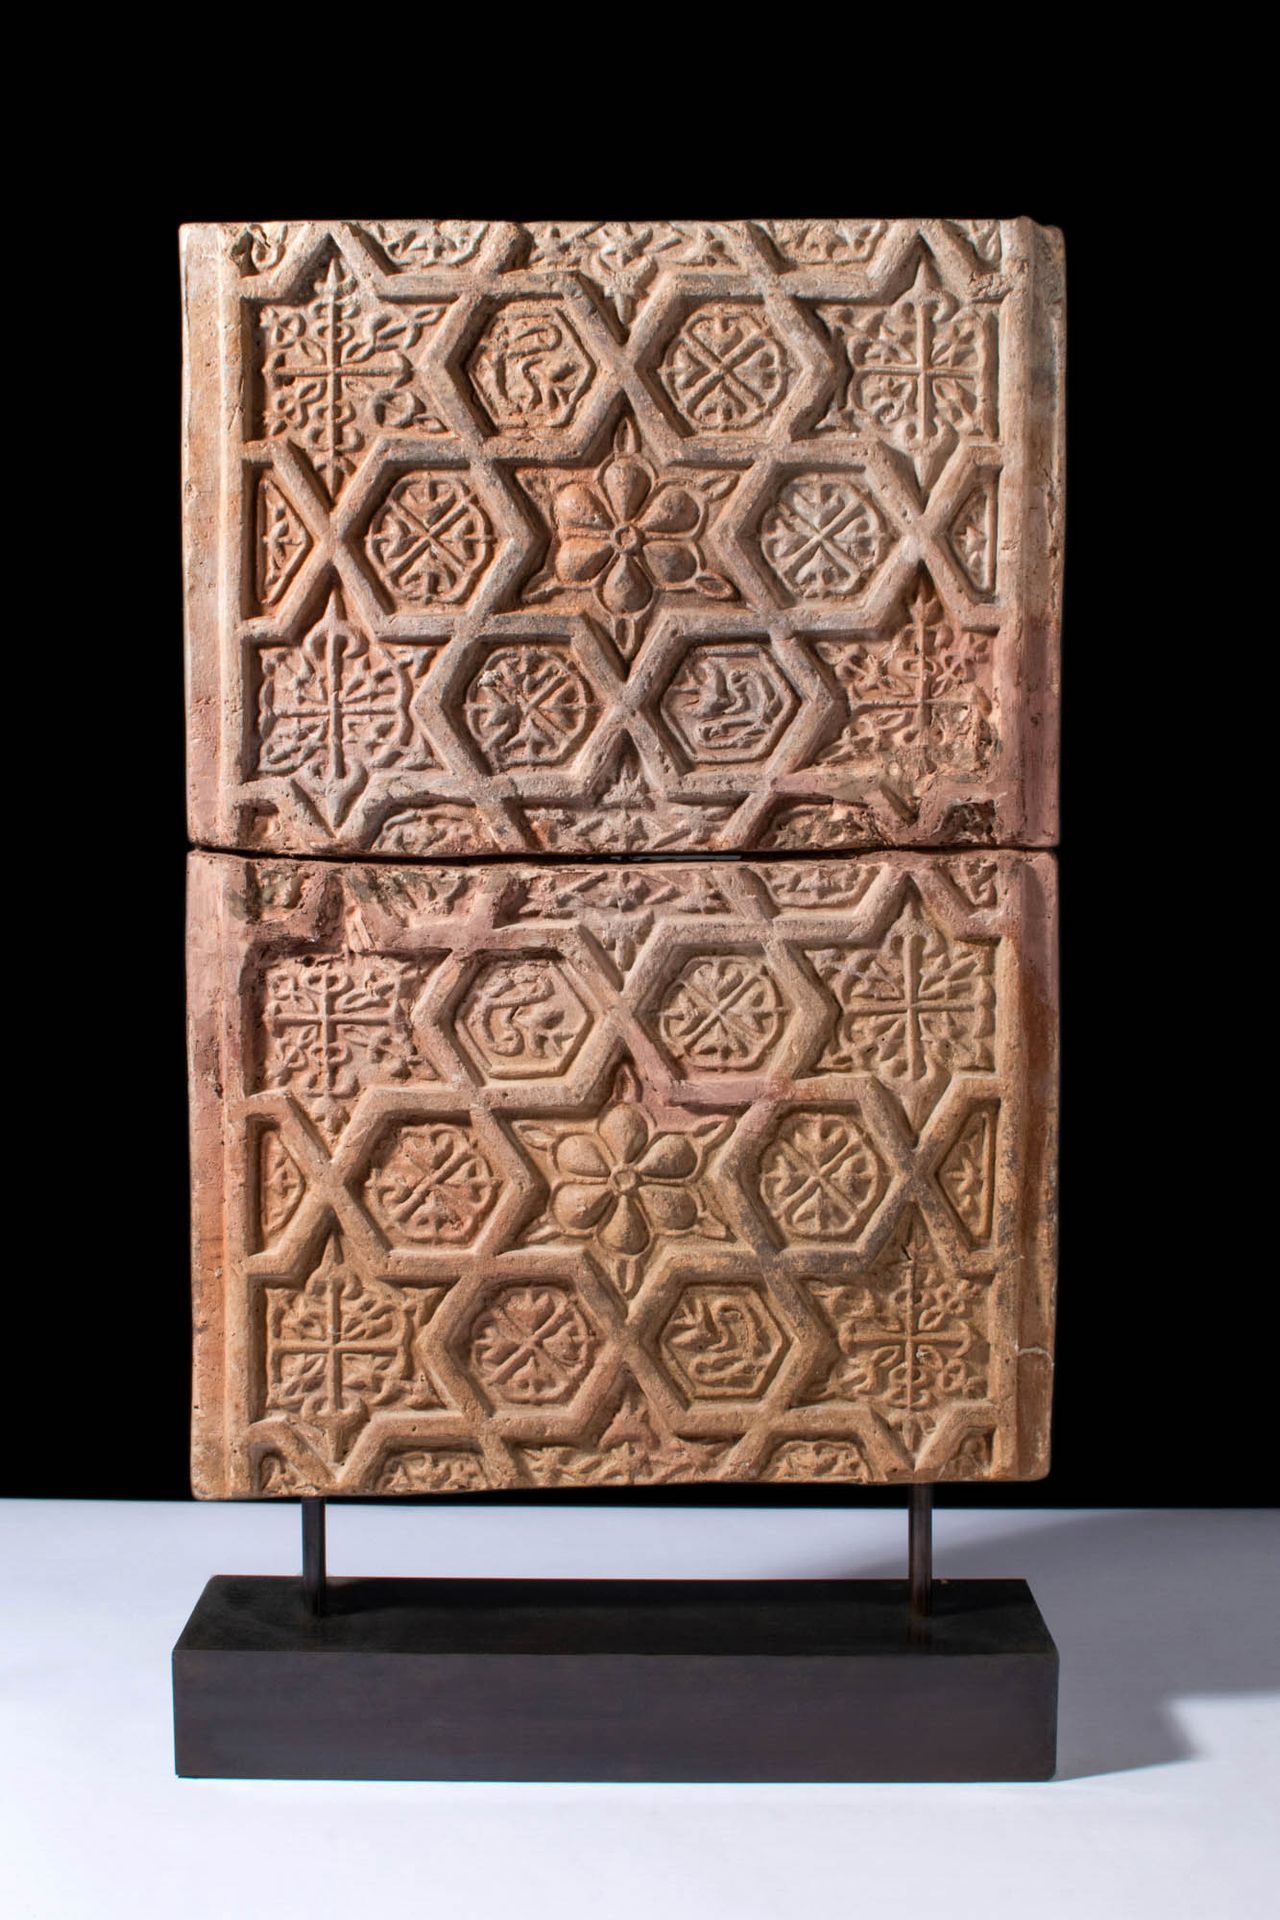 SELJUK TERRACOTTA PAIR OF DECORATIVE TILES Ca. AD 1100 - 1200.
A pair of rectang&hellip;